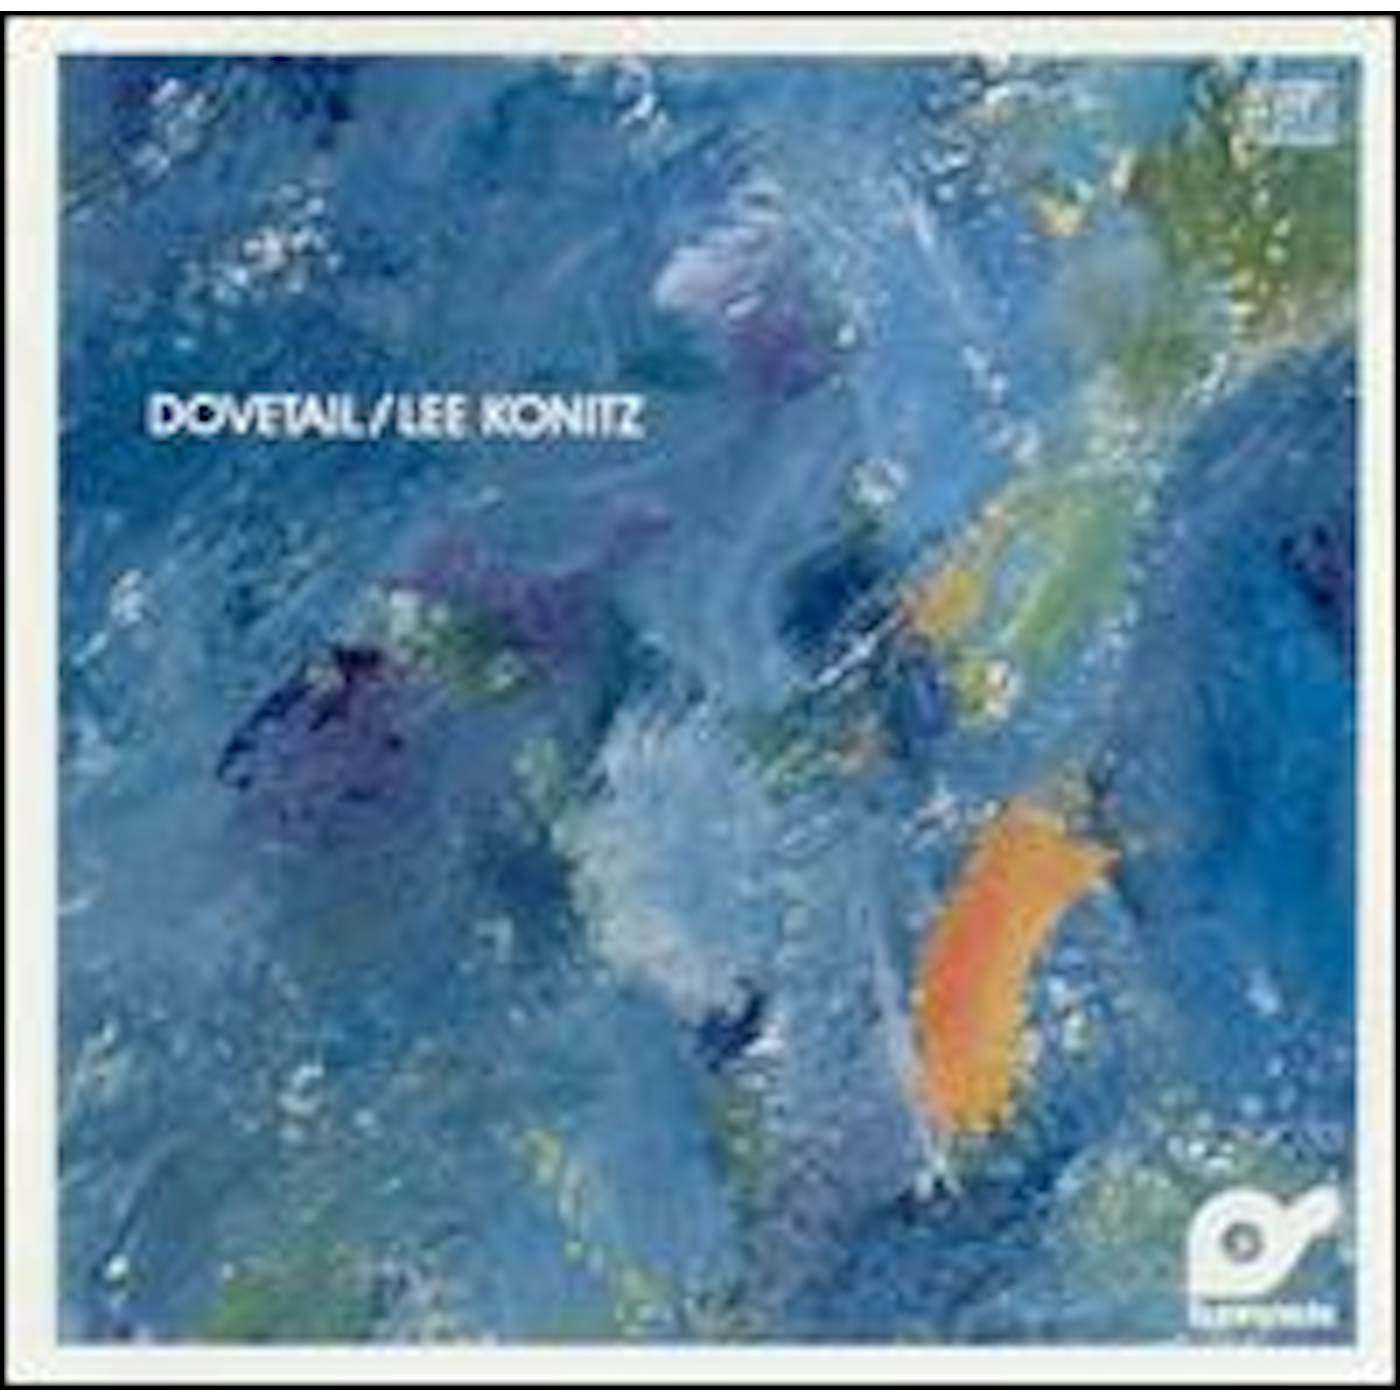 Lee Konitz DOVETAIL CD